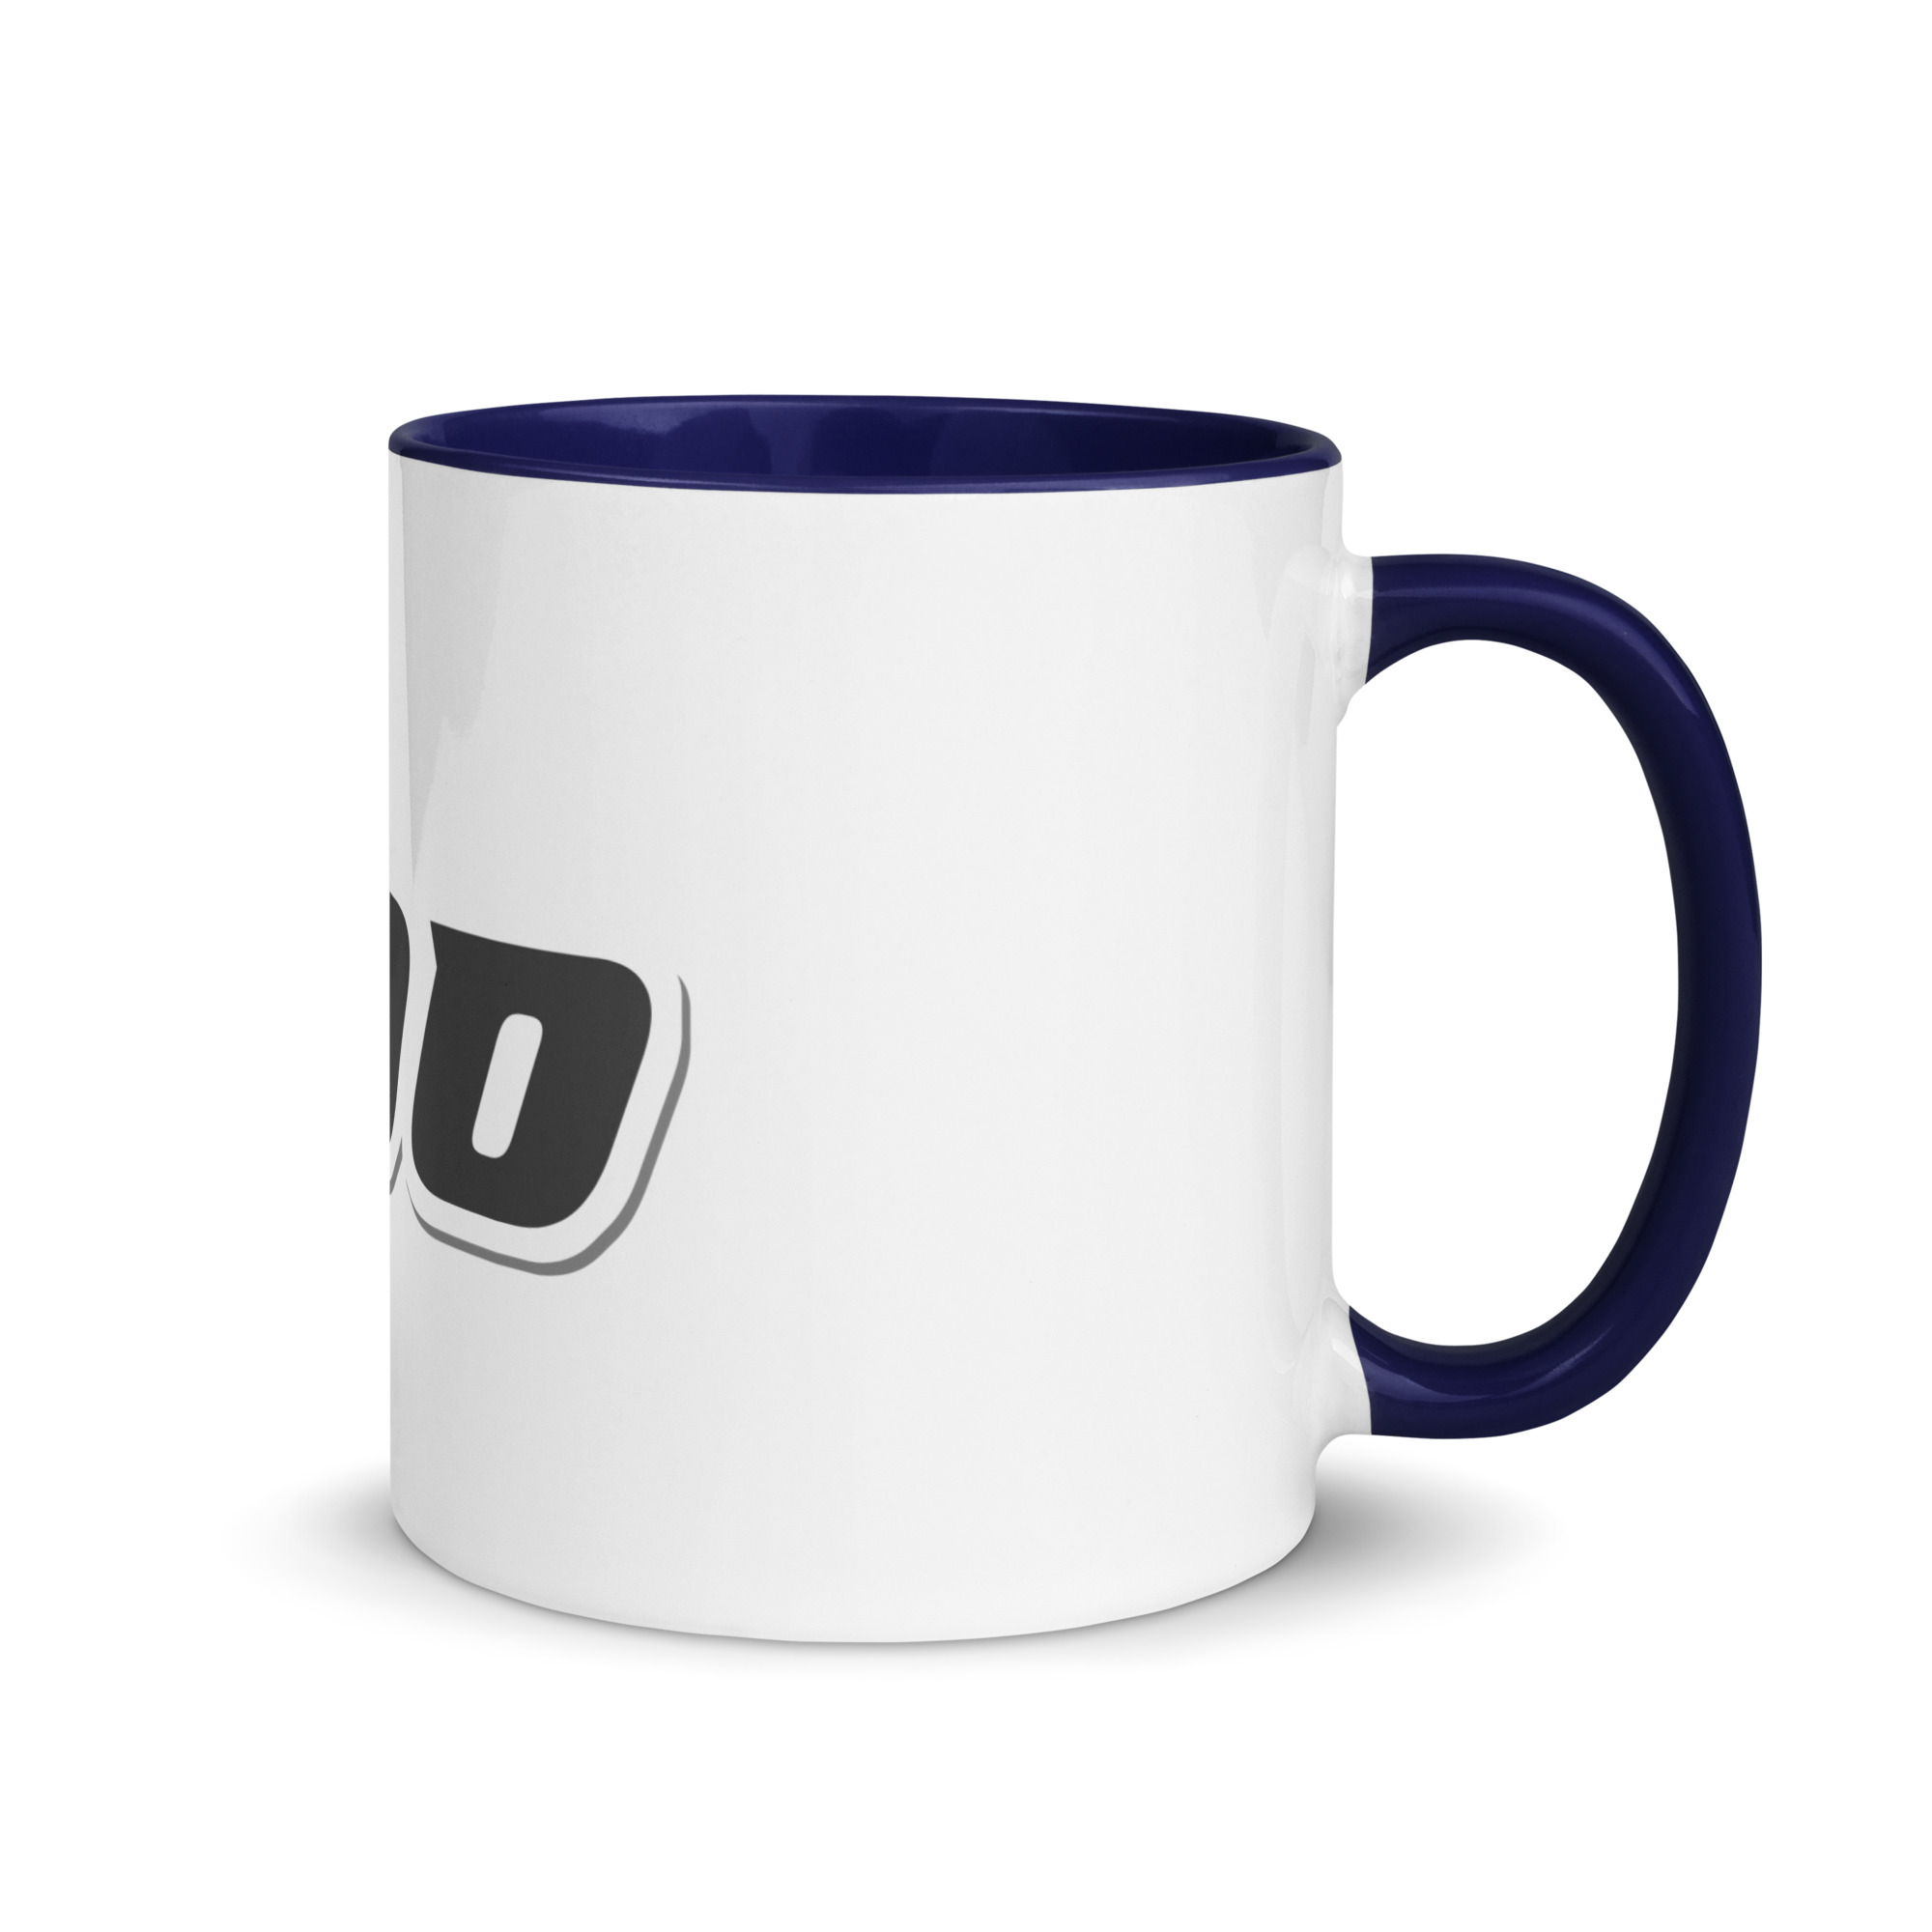 white-ceramic-mug-with-color-inside-dark-blue-11-oz-right-6525b6484c0dd.jpg